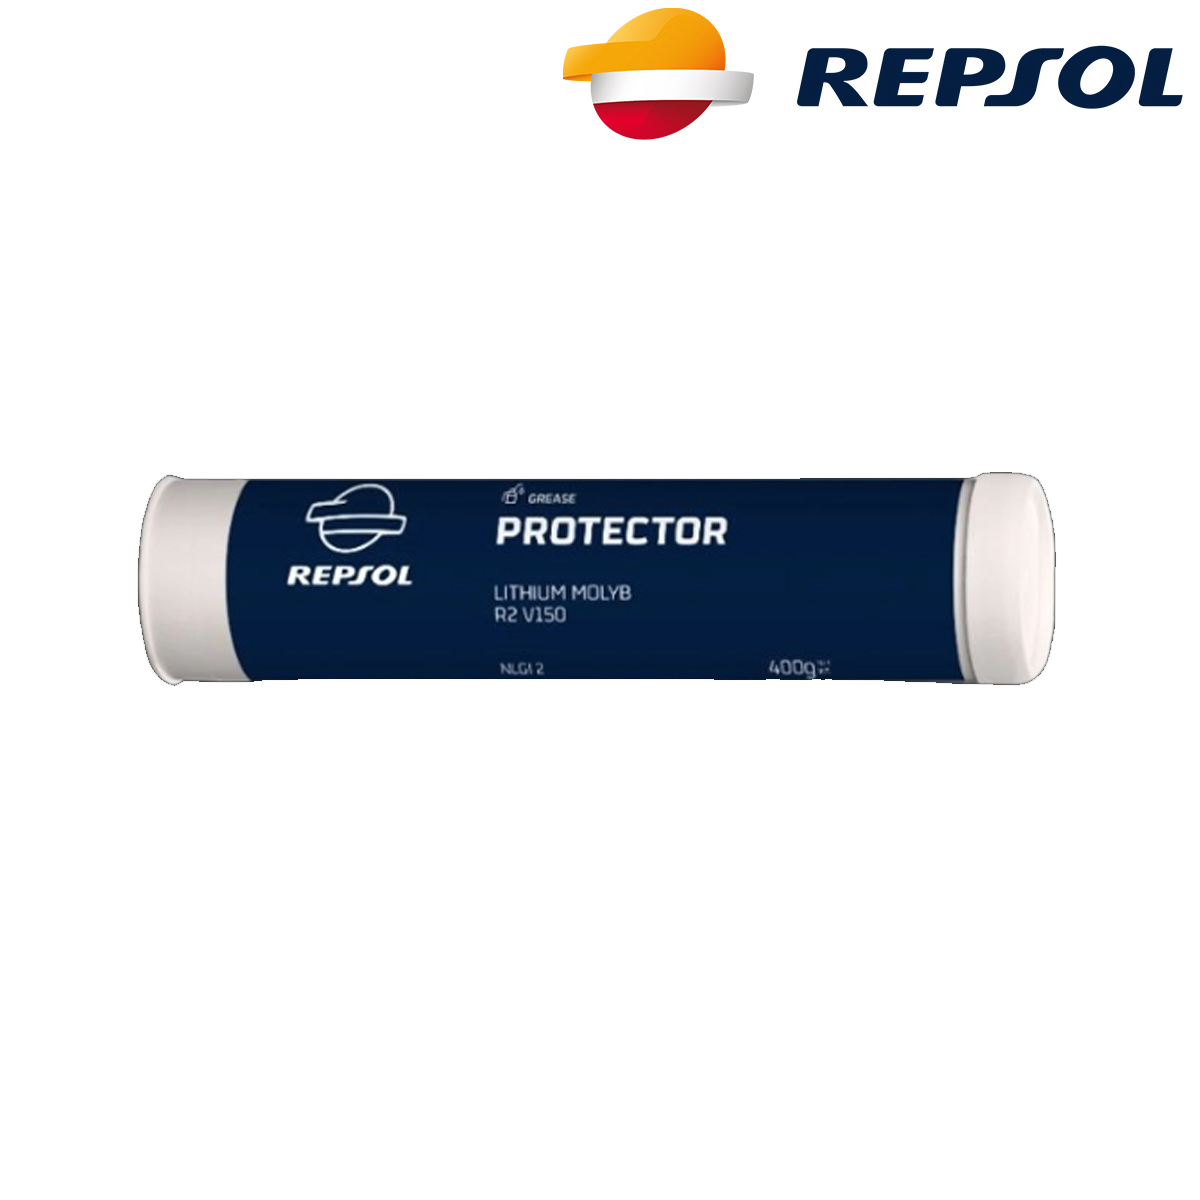 Univerzalna mast za podmazivanje Repsol Protector Lithium Molyb R2 V150 400g RPP8001EJG